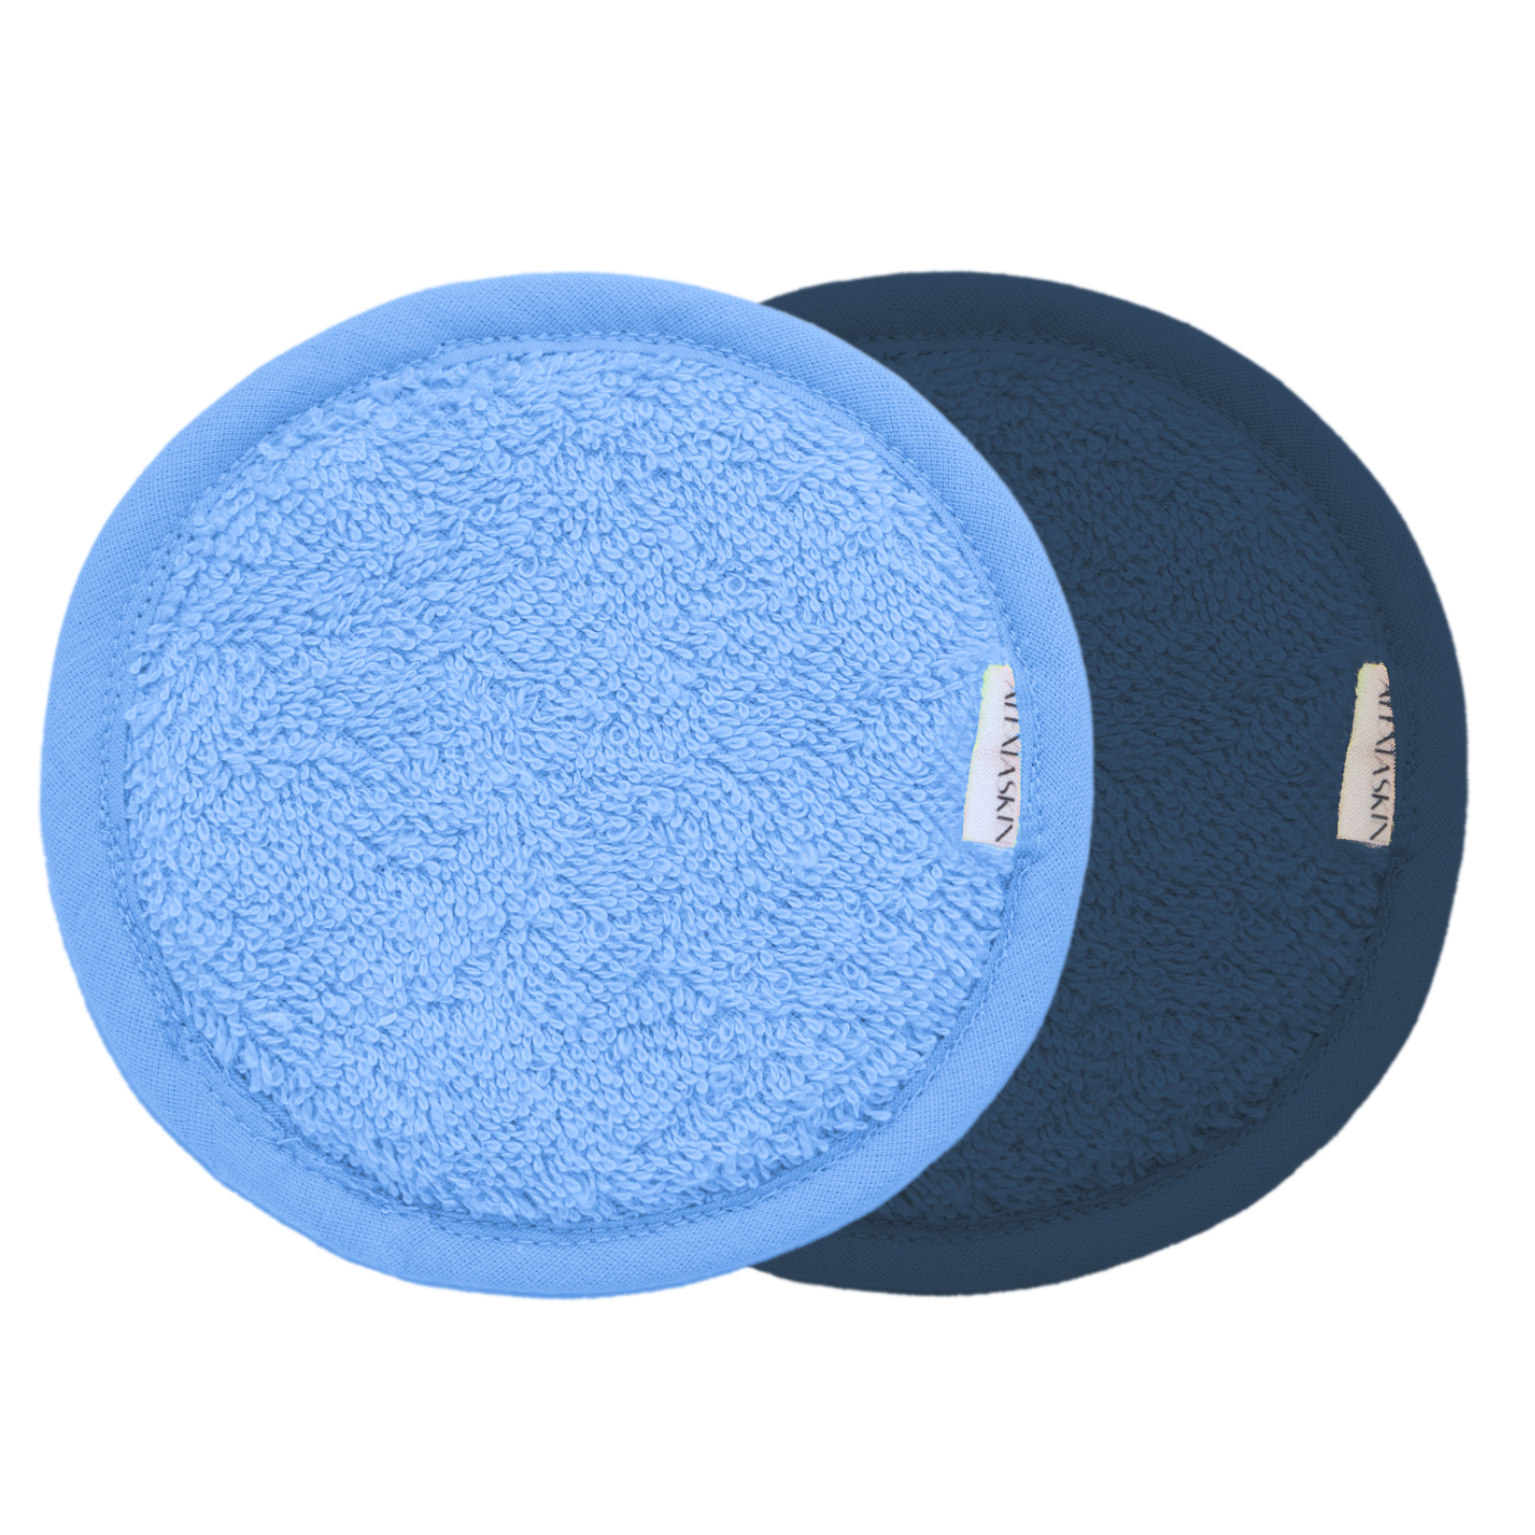 Ocean Blue- x2 pads ντεμακιγιάζ γαλάζιο-μπλε